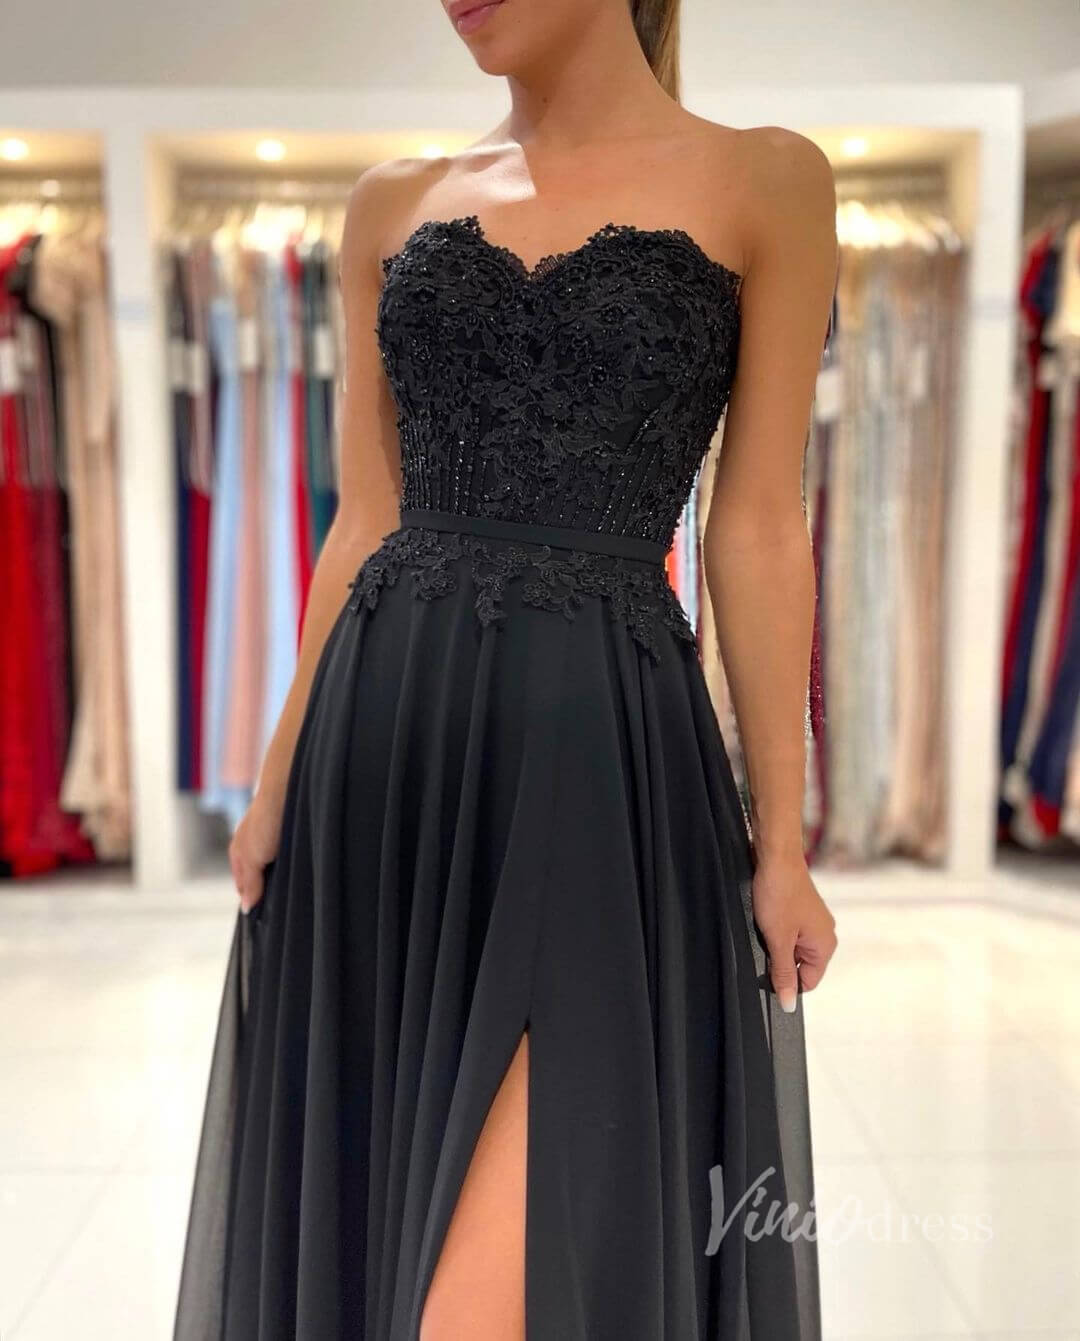 black strapless prom dress